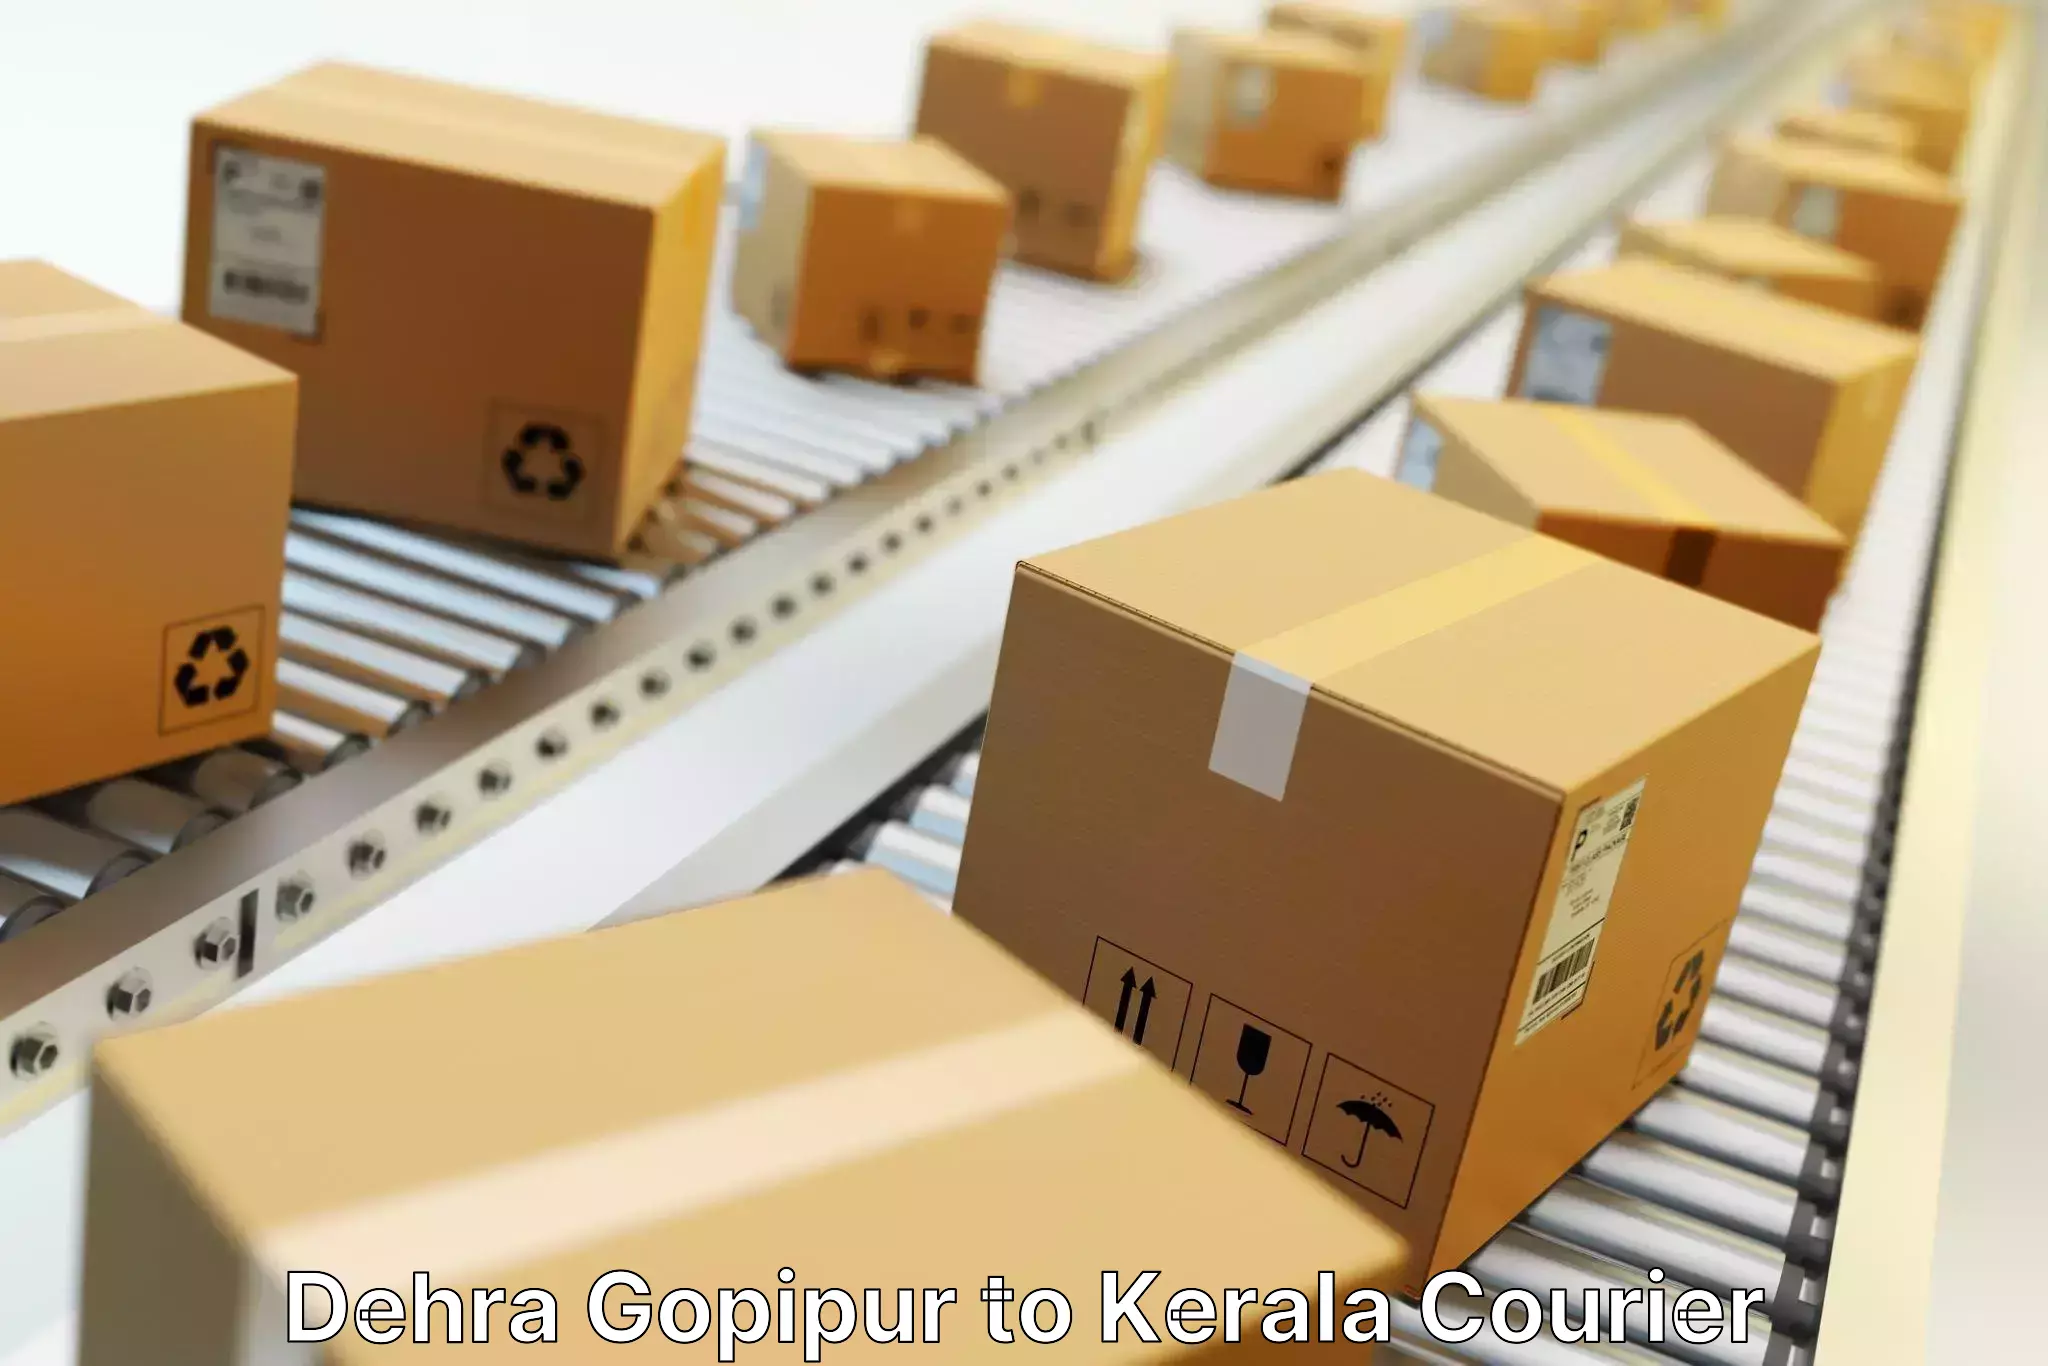 International parcel service Dehra Gopipur to Kerala